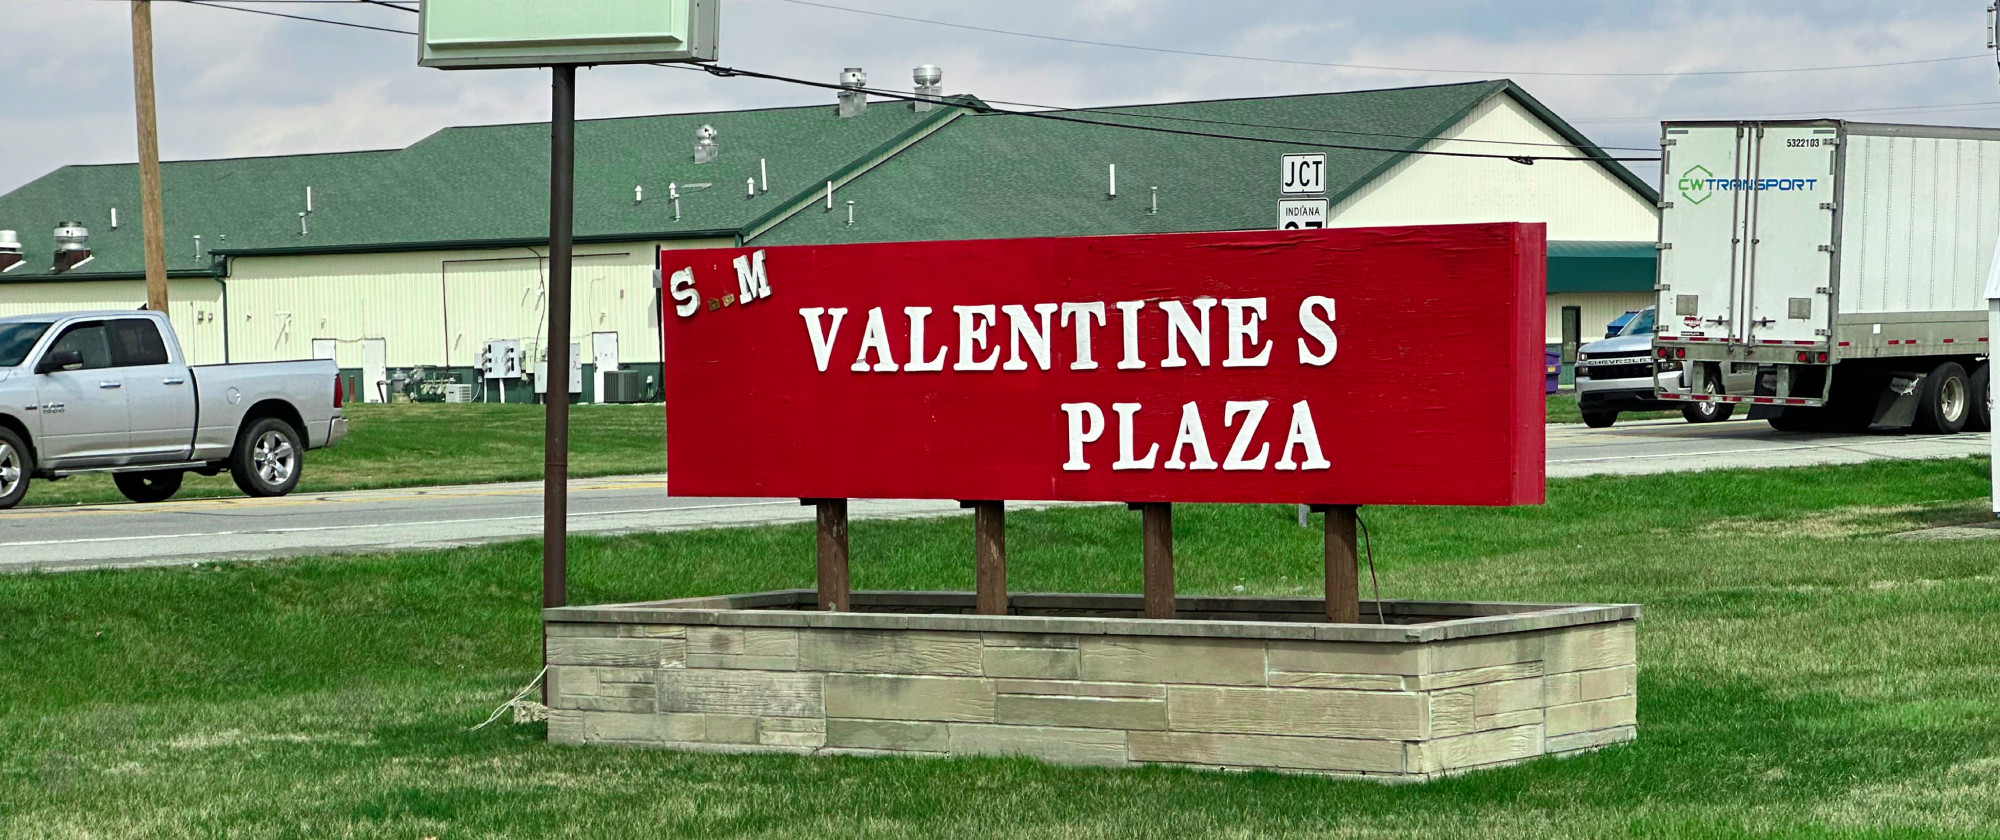 Sturges Property Group - Valentine Plaza, 7445 W SR 28, Elwood, IN 46036